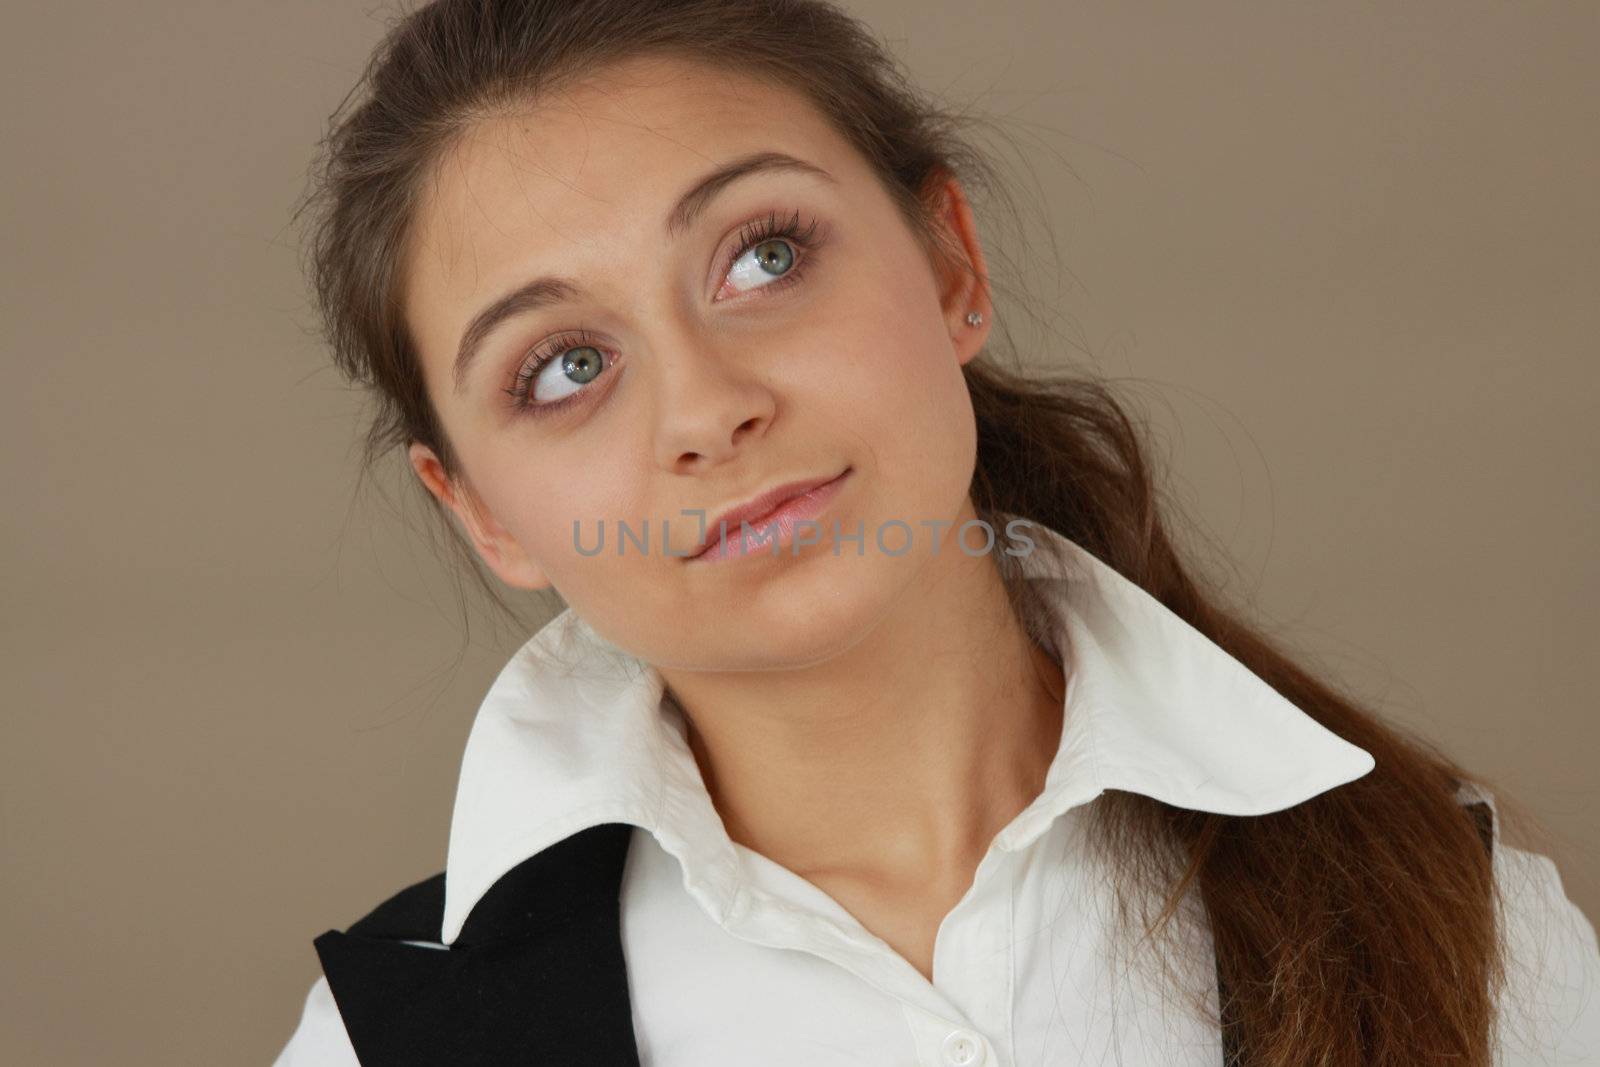 Student girl over light brown background